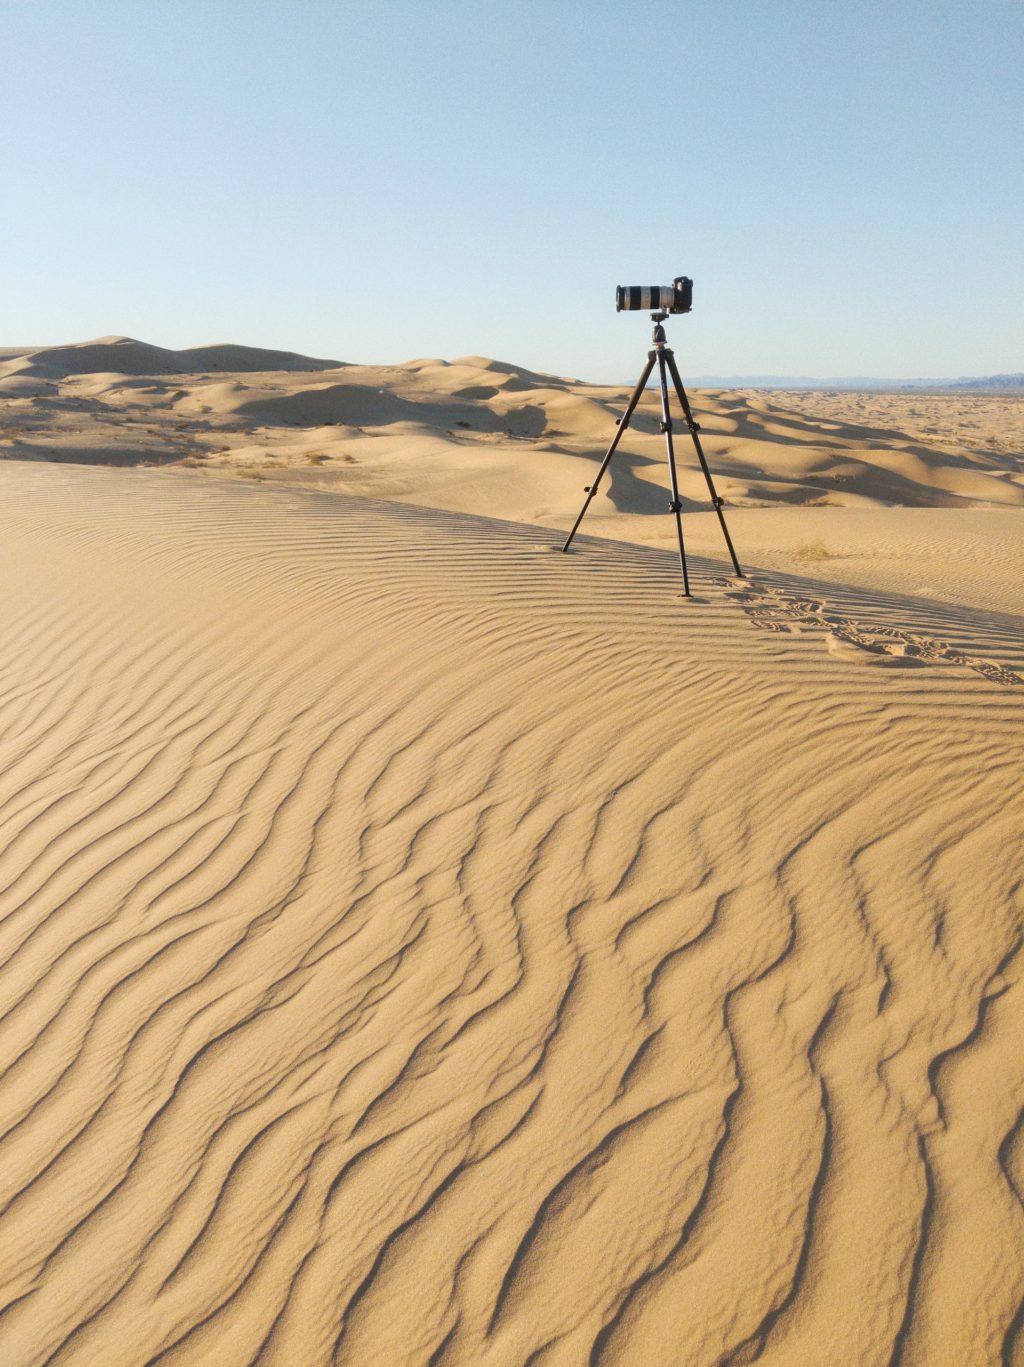 camera gear in front of desert landscape